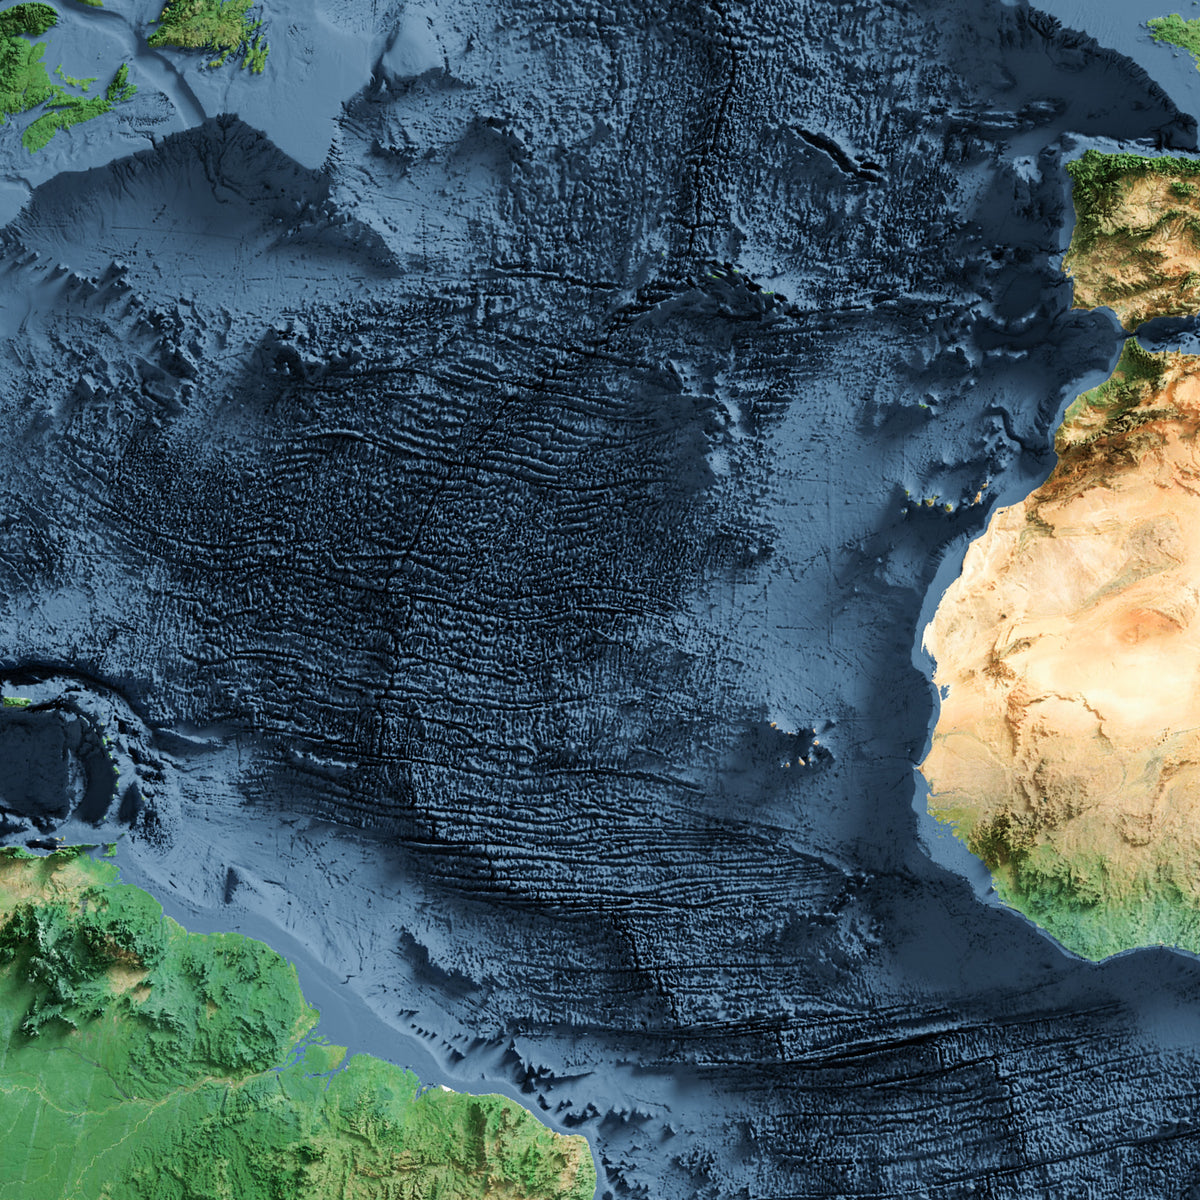 mid atlantic ridge on world map